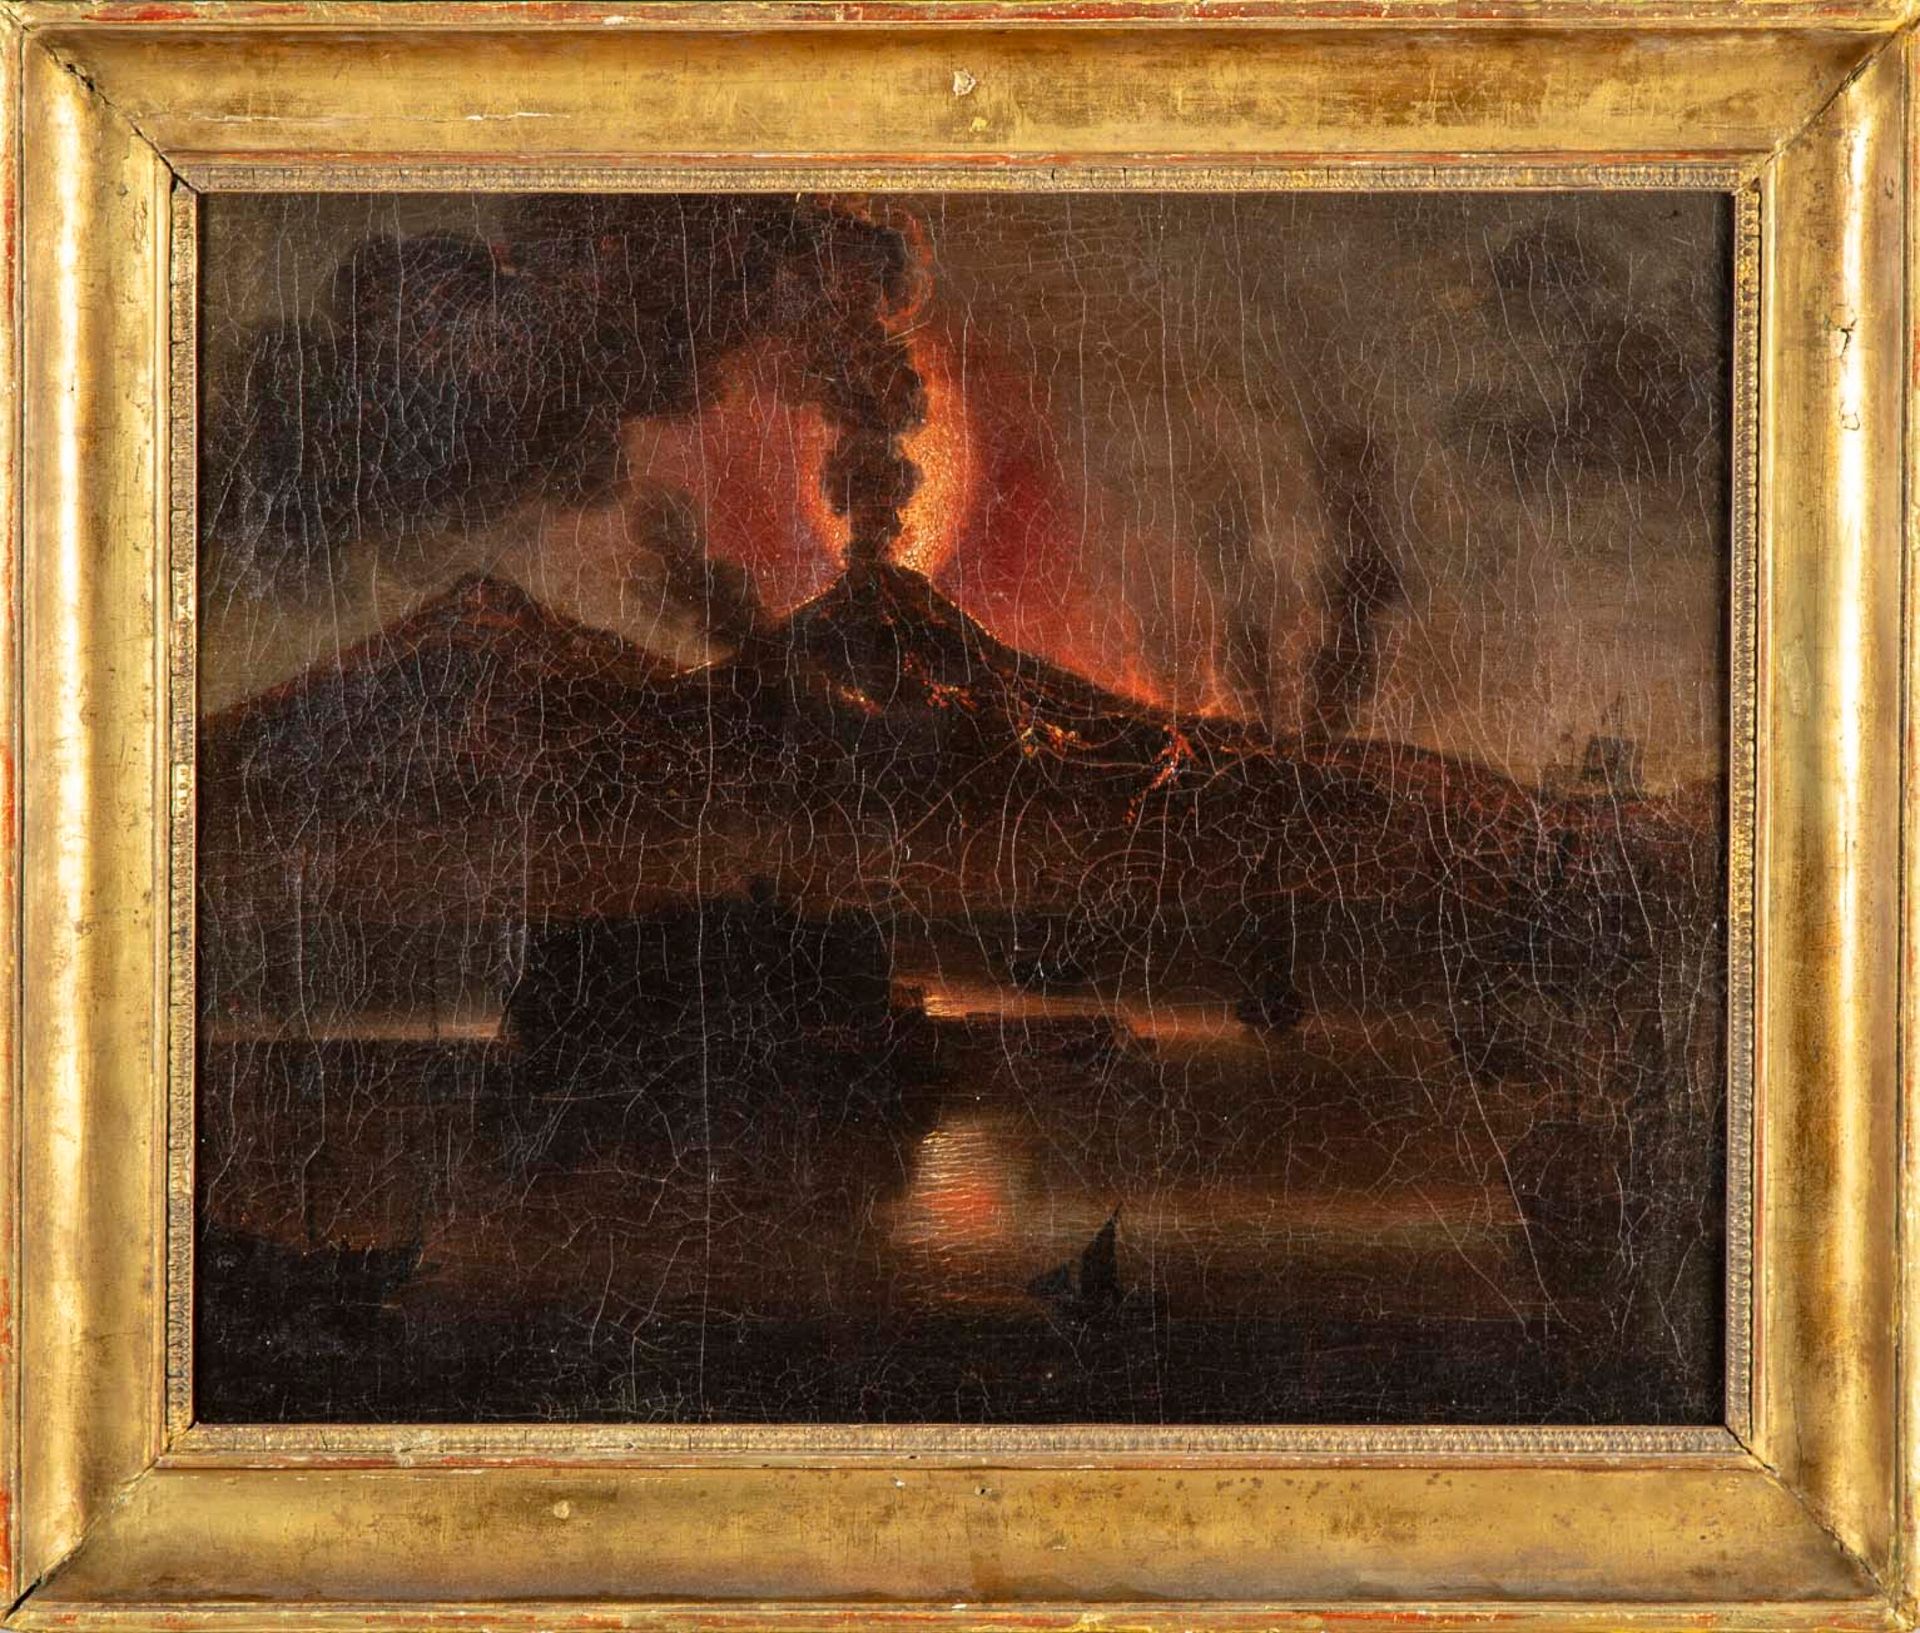 École italienne 意大利学校

维苏威火山爆发时的景象

布面油画

47 x 58 厘米

恢复